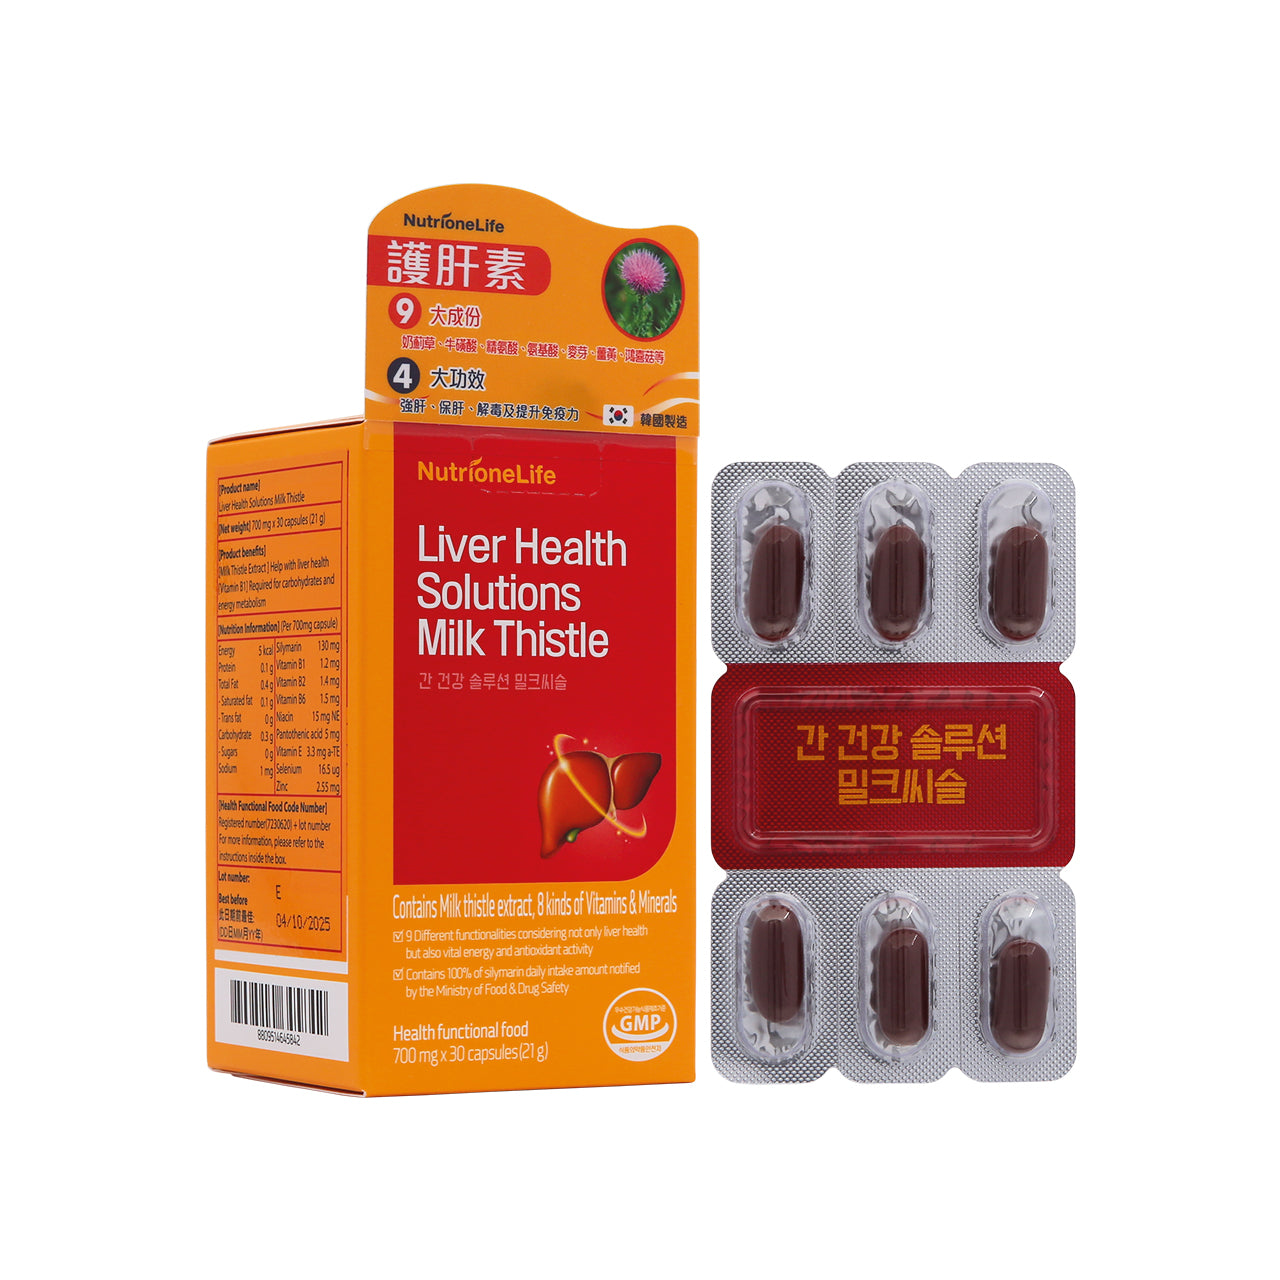 NutrioneLife Liver Health Solutions Milk Thistle 30 capsules